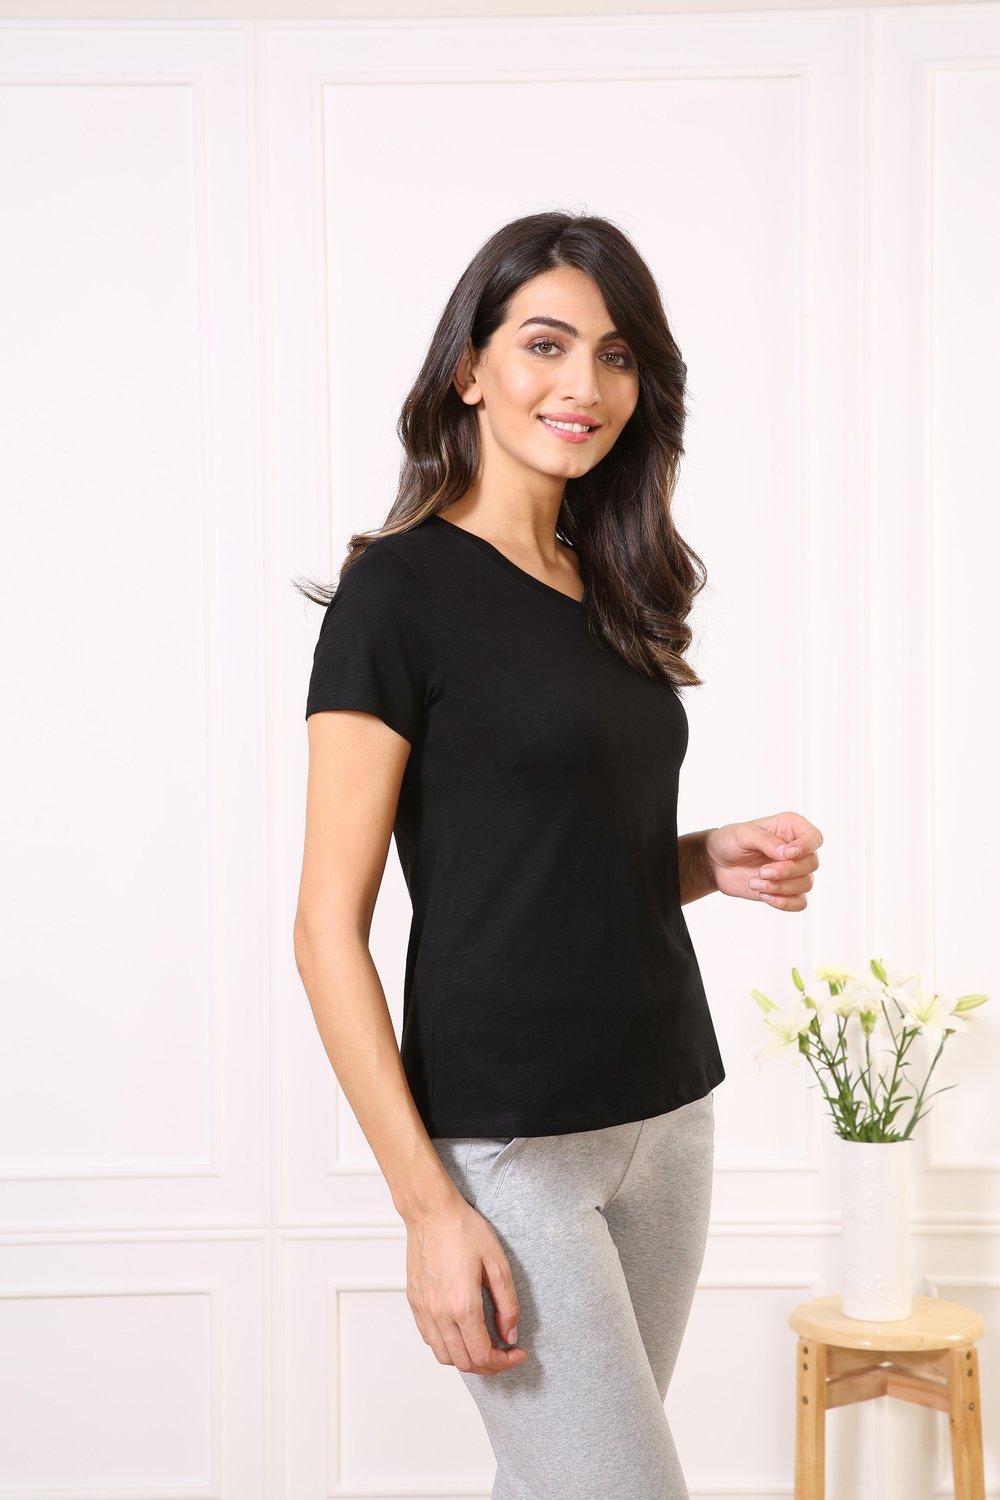 Cotton V-Neck Every day Wear Black tee t-shirt tops for Girls - Stilento